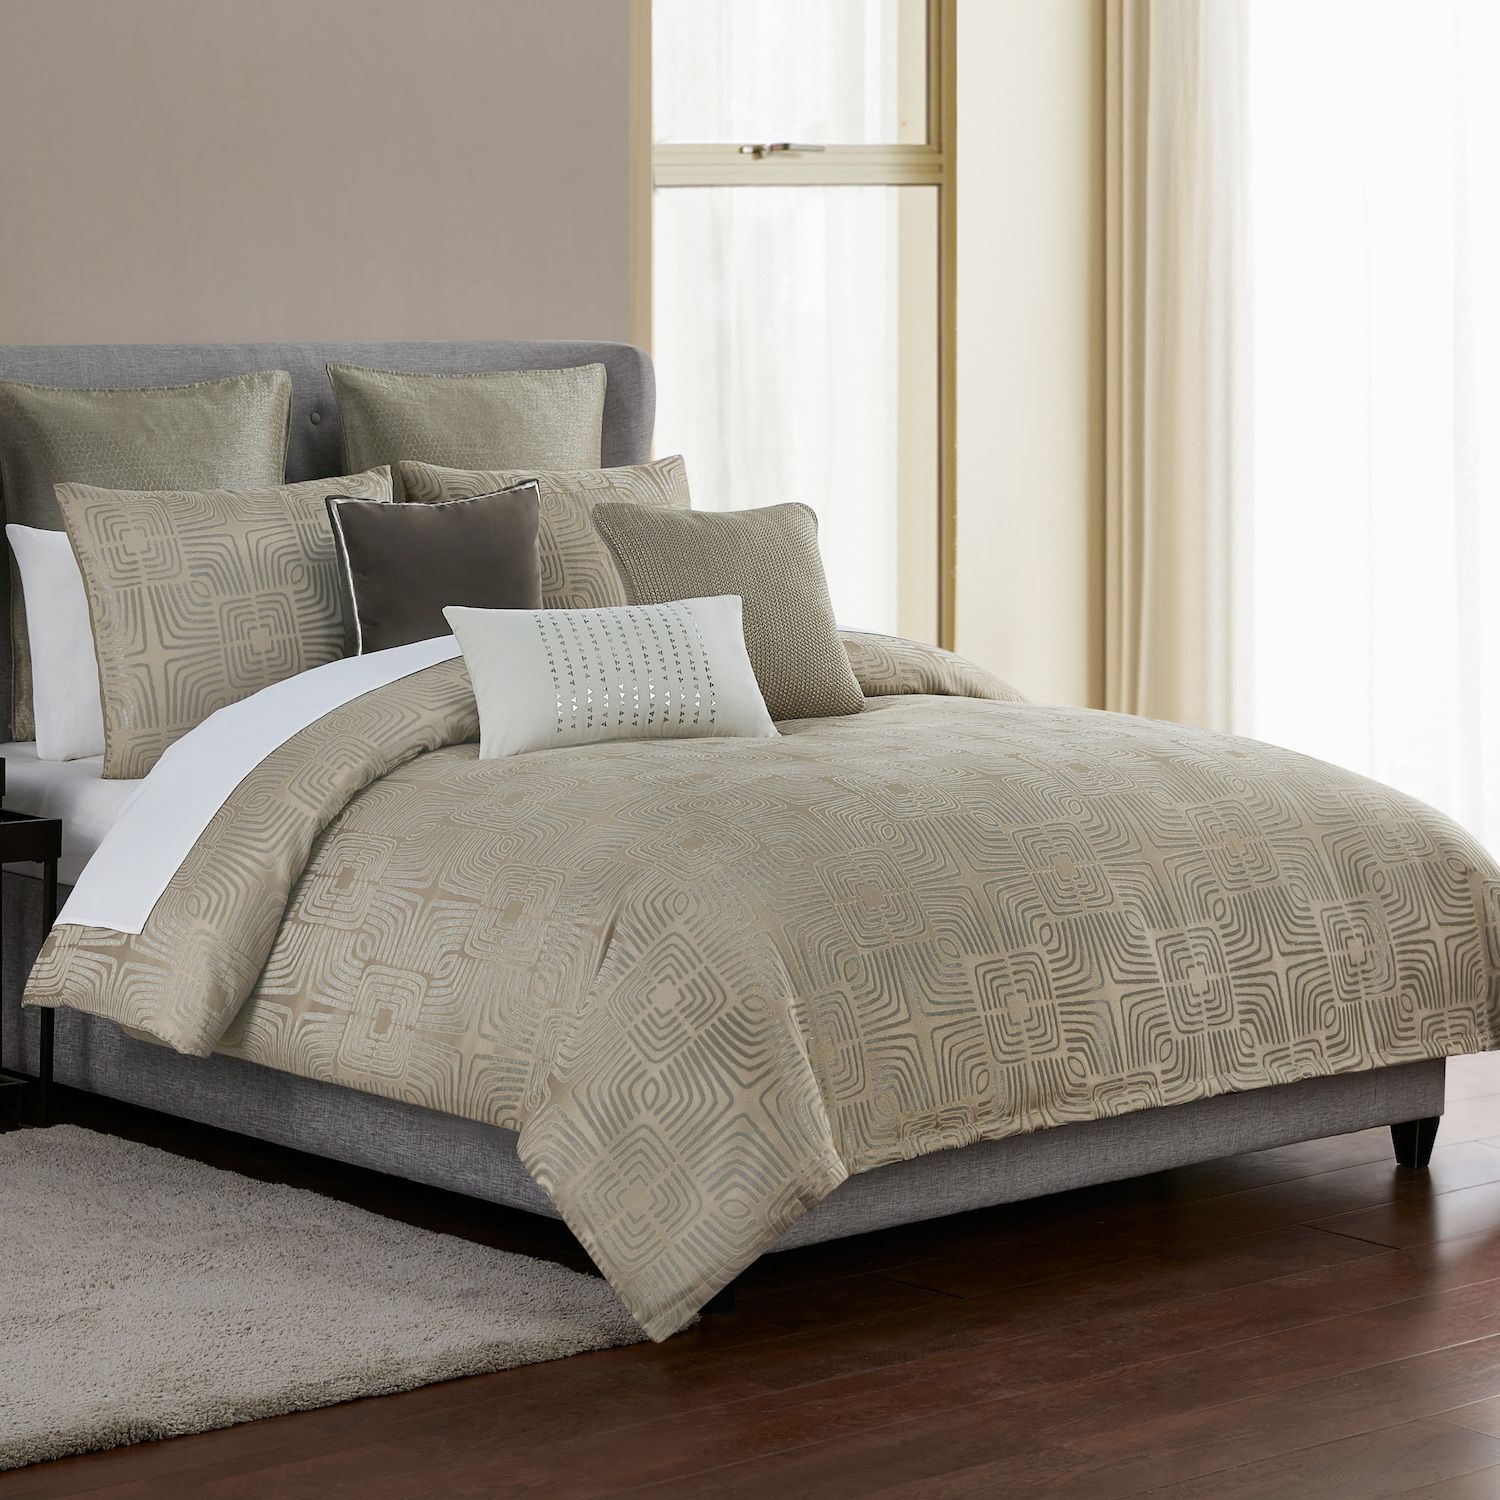 Image for HIGHLINE BEDDING CO Highline Bedding Co. Theo 3-piece Comforter Set with Shams at Kohl's.